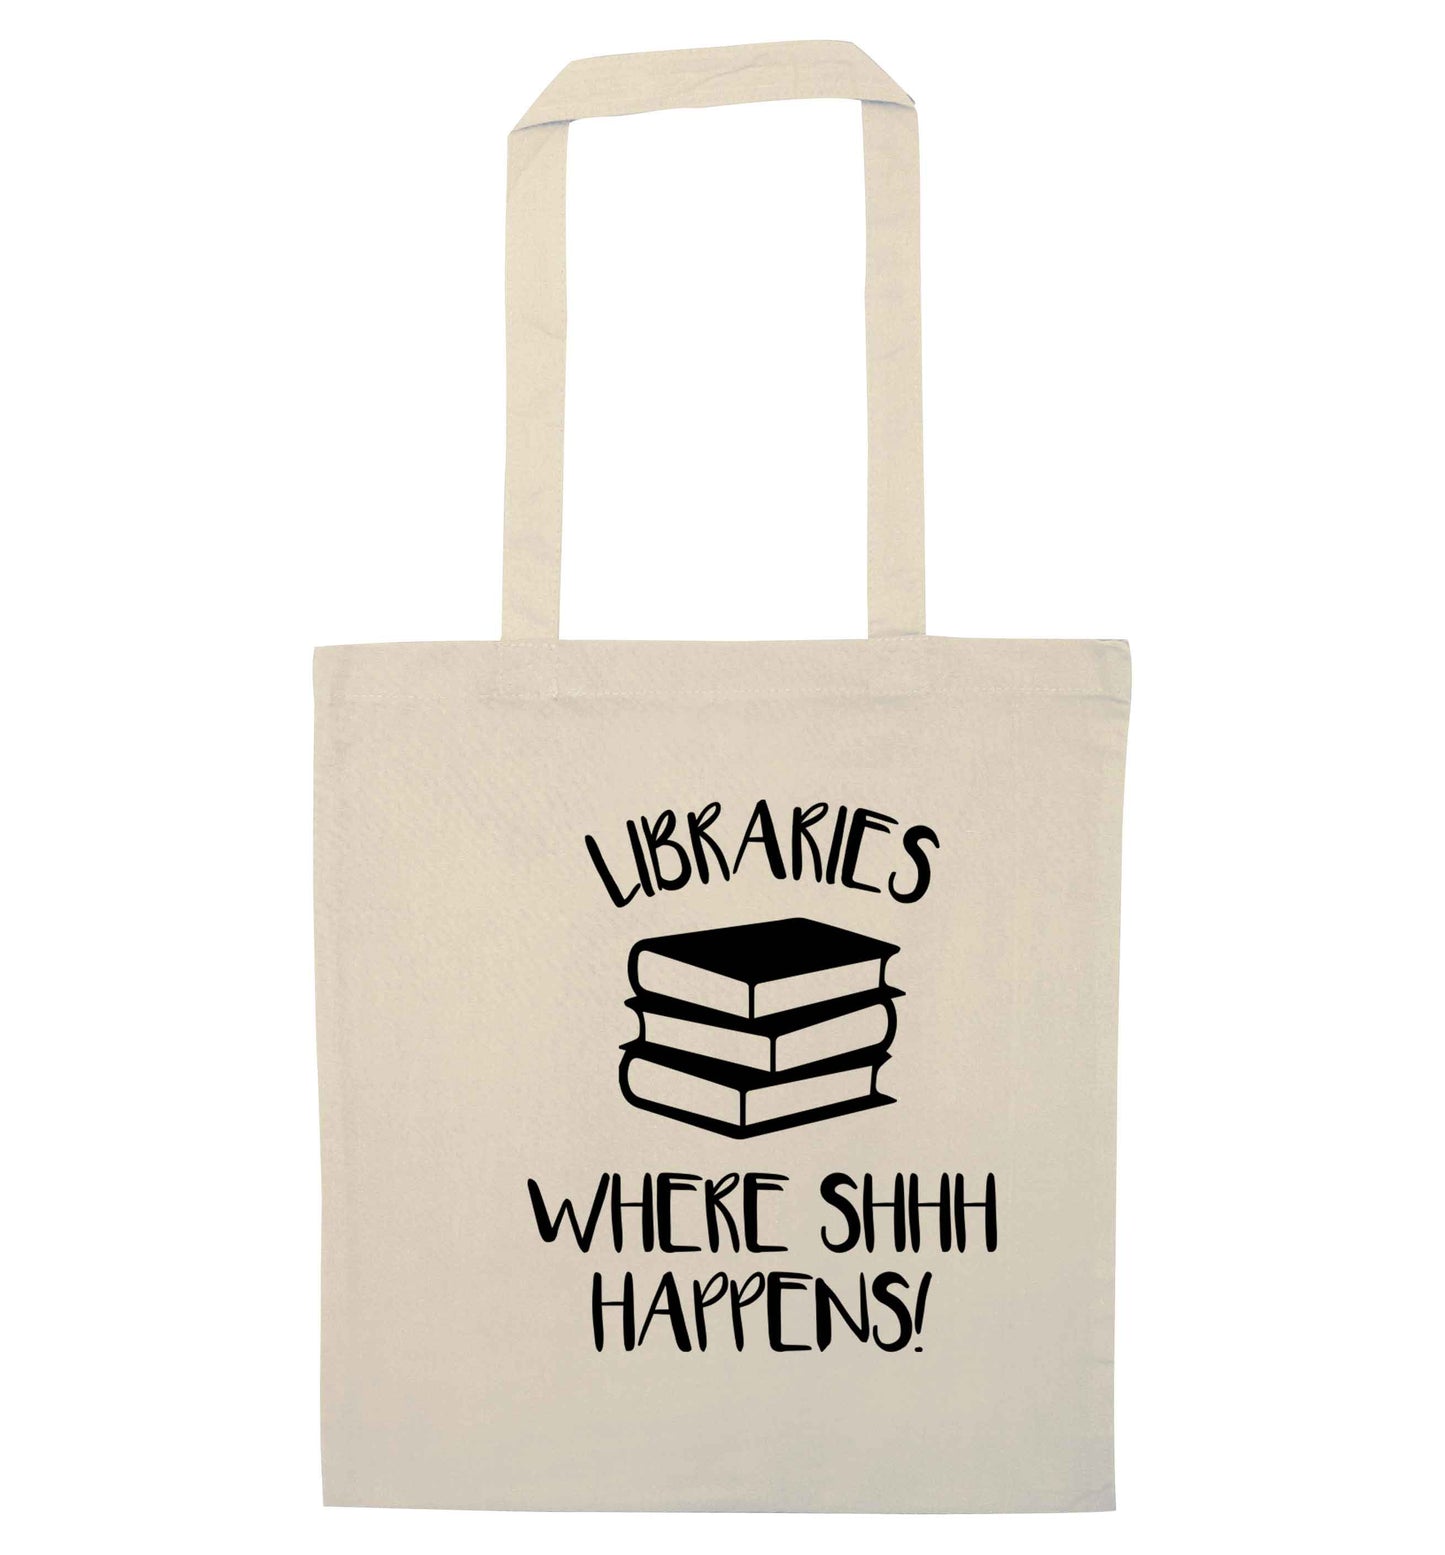 Libraries where shh happens! natural tote bag